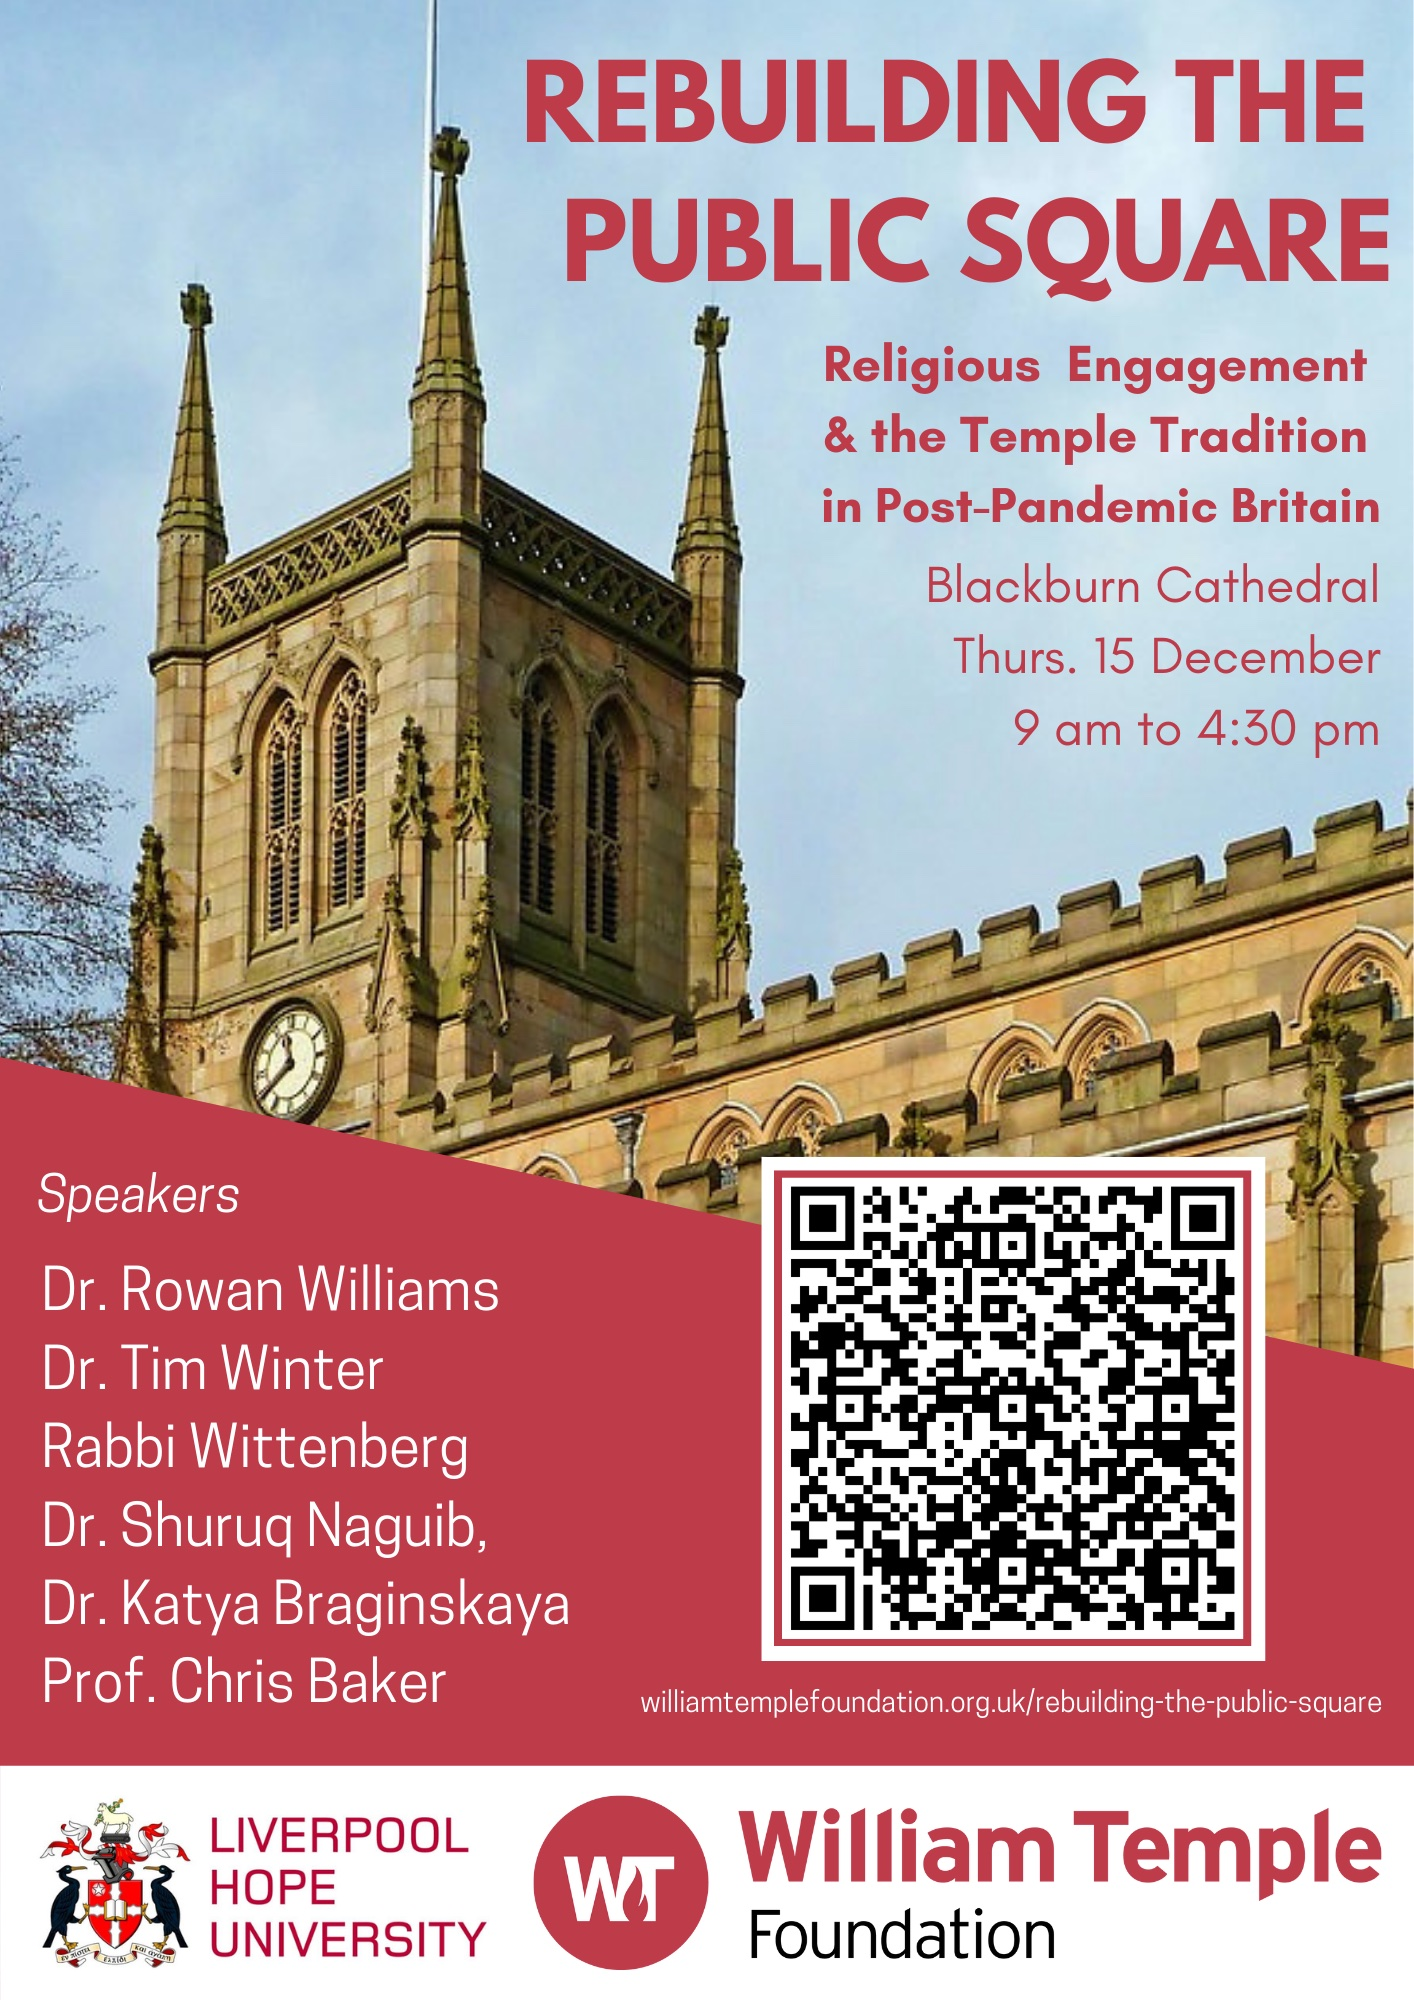 Poster regarding rebuilding the public square, religious engagement at Blackburn Cathedral